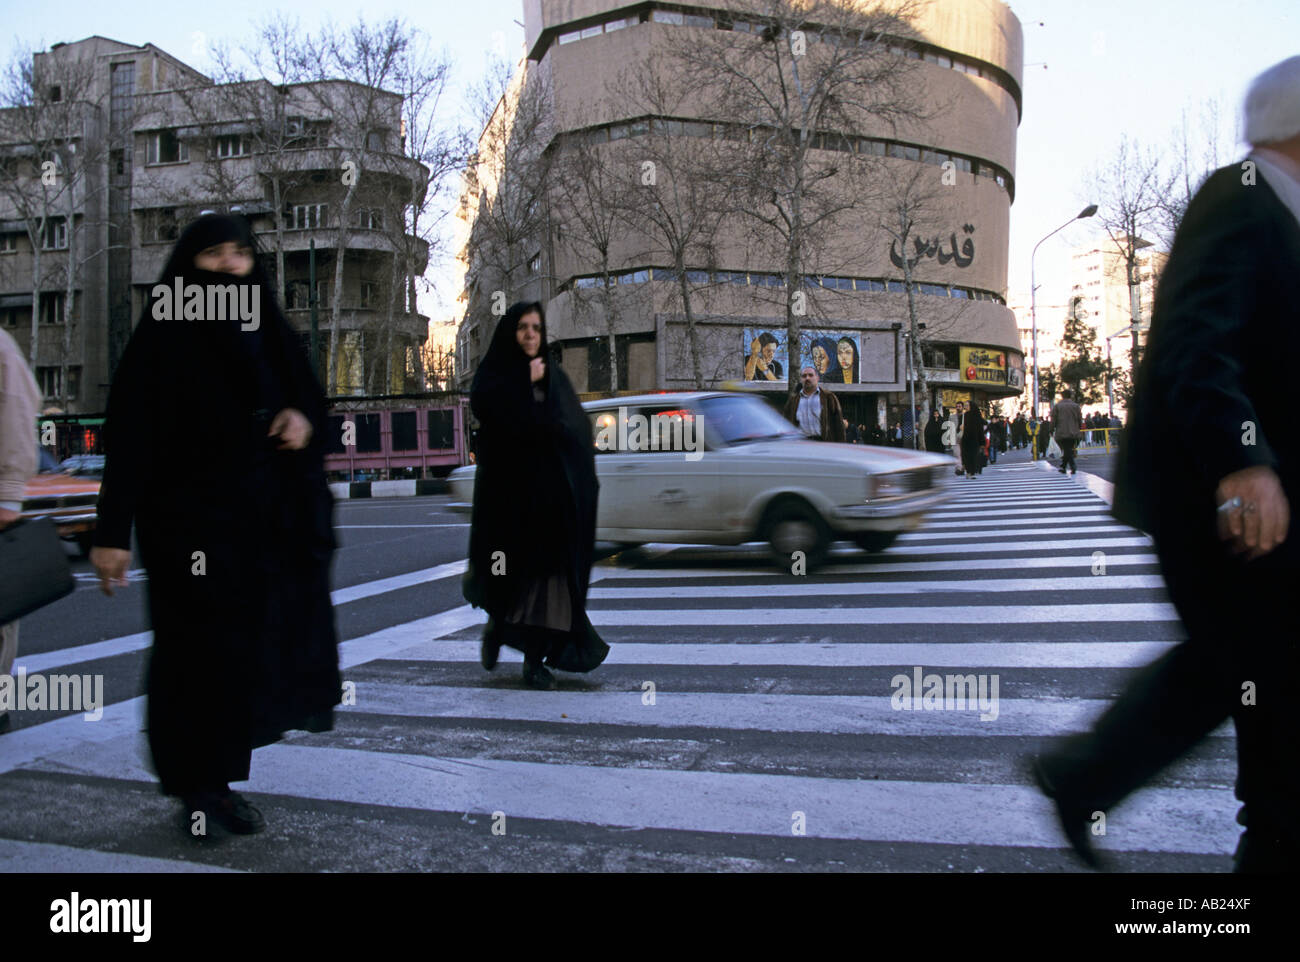 A street scene in Tehran Iran Stock Photo